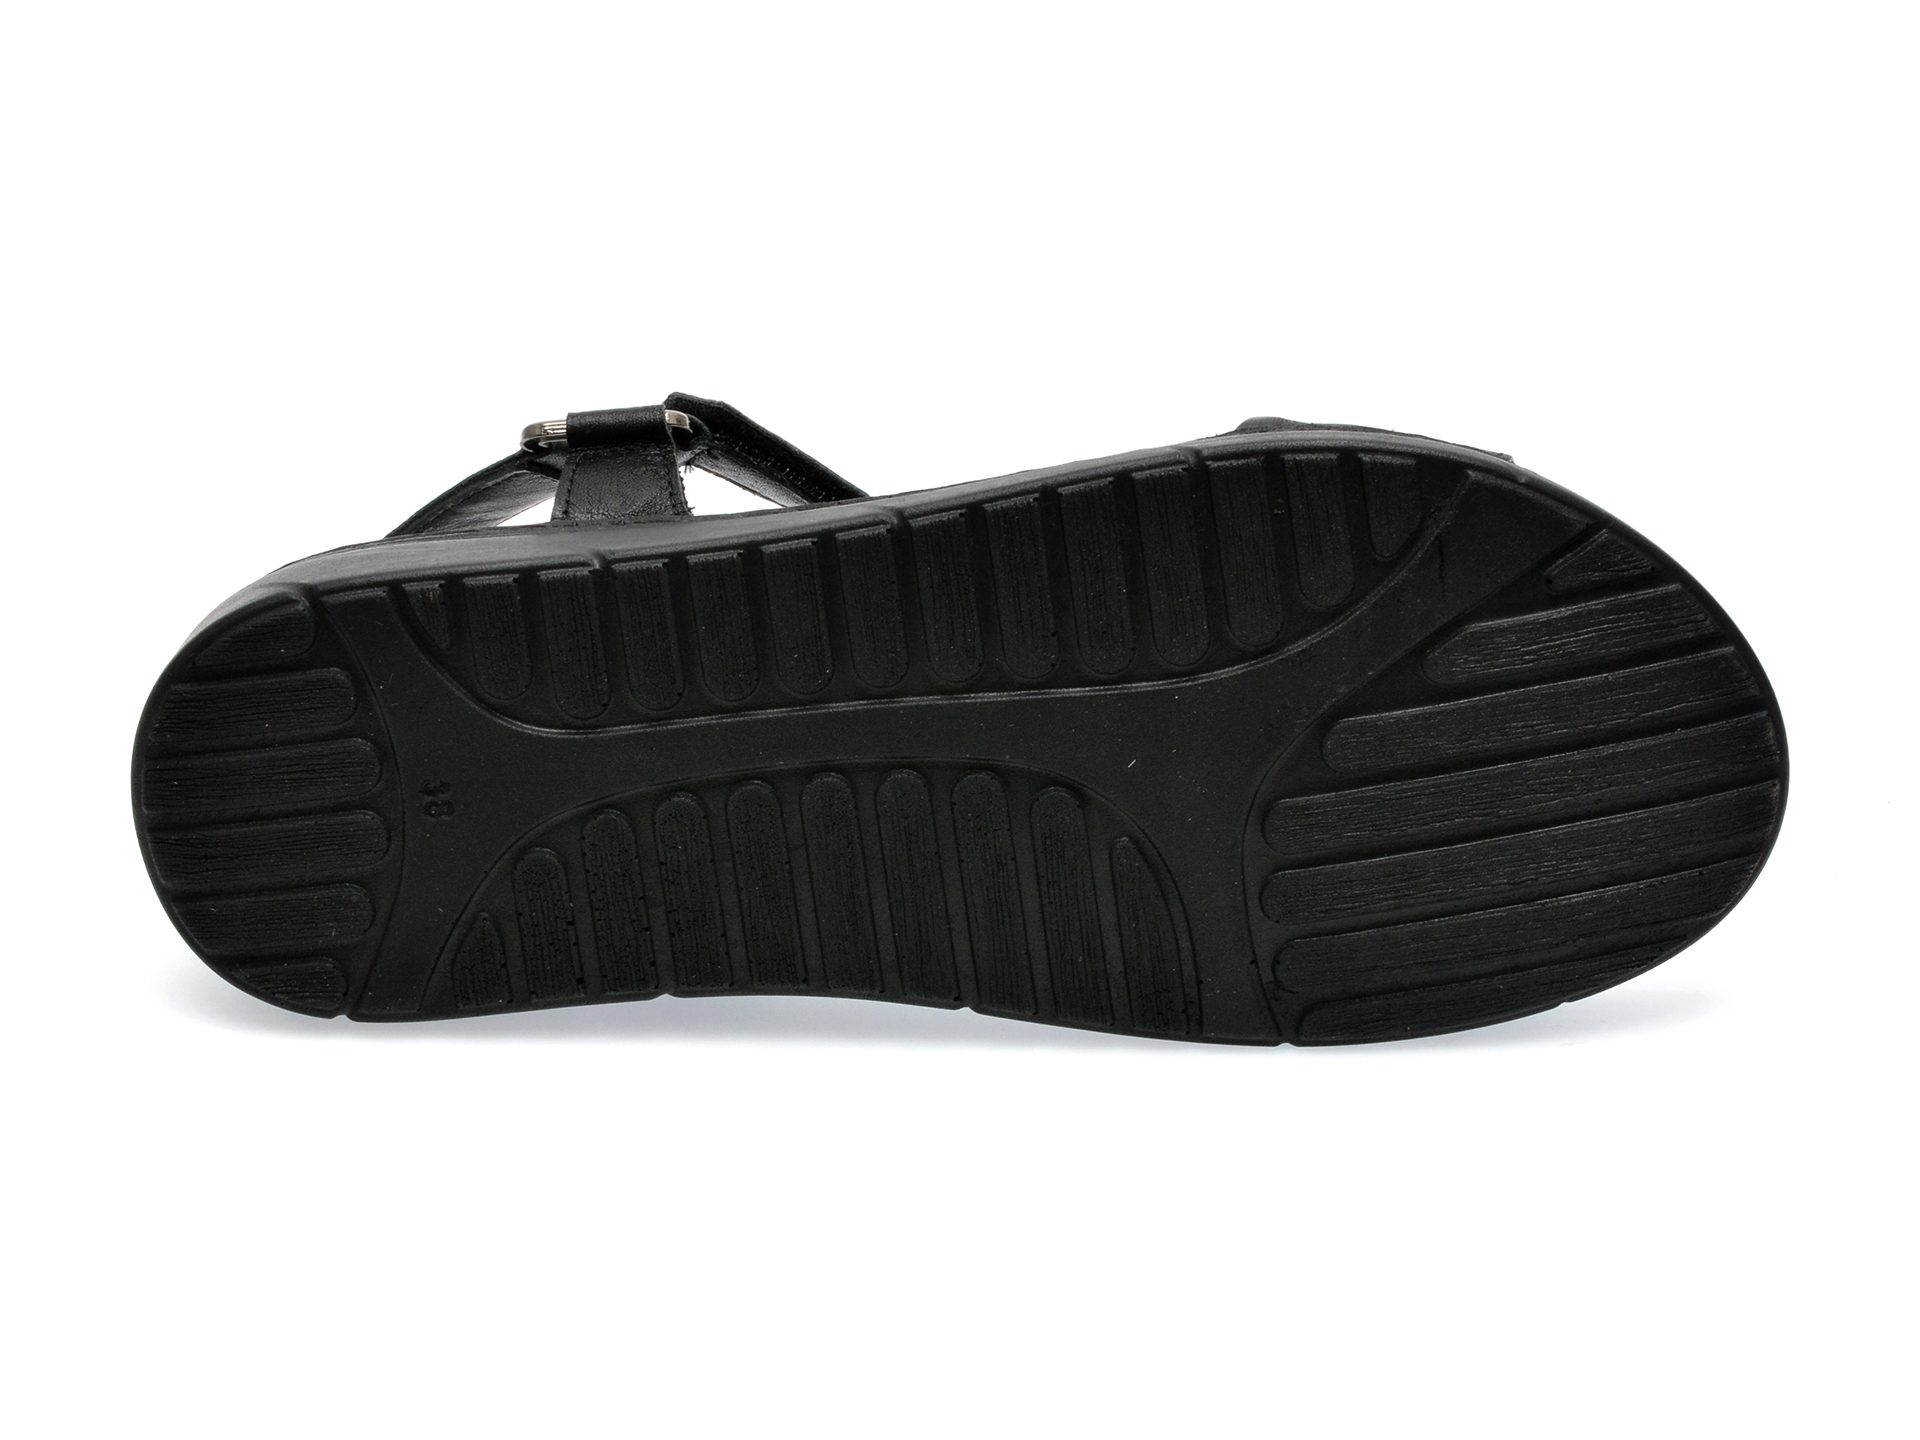 Sandale PASS COLLECTION negre, 808, din piele naturala